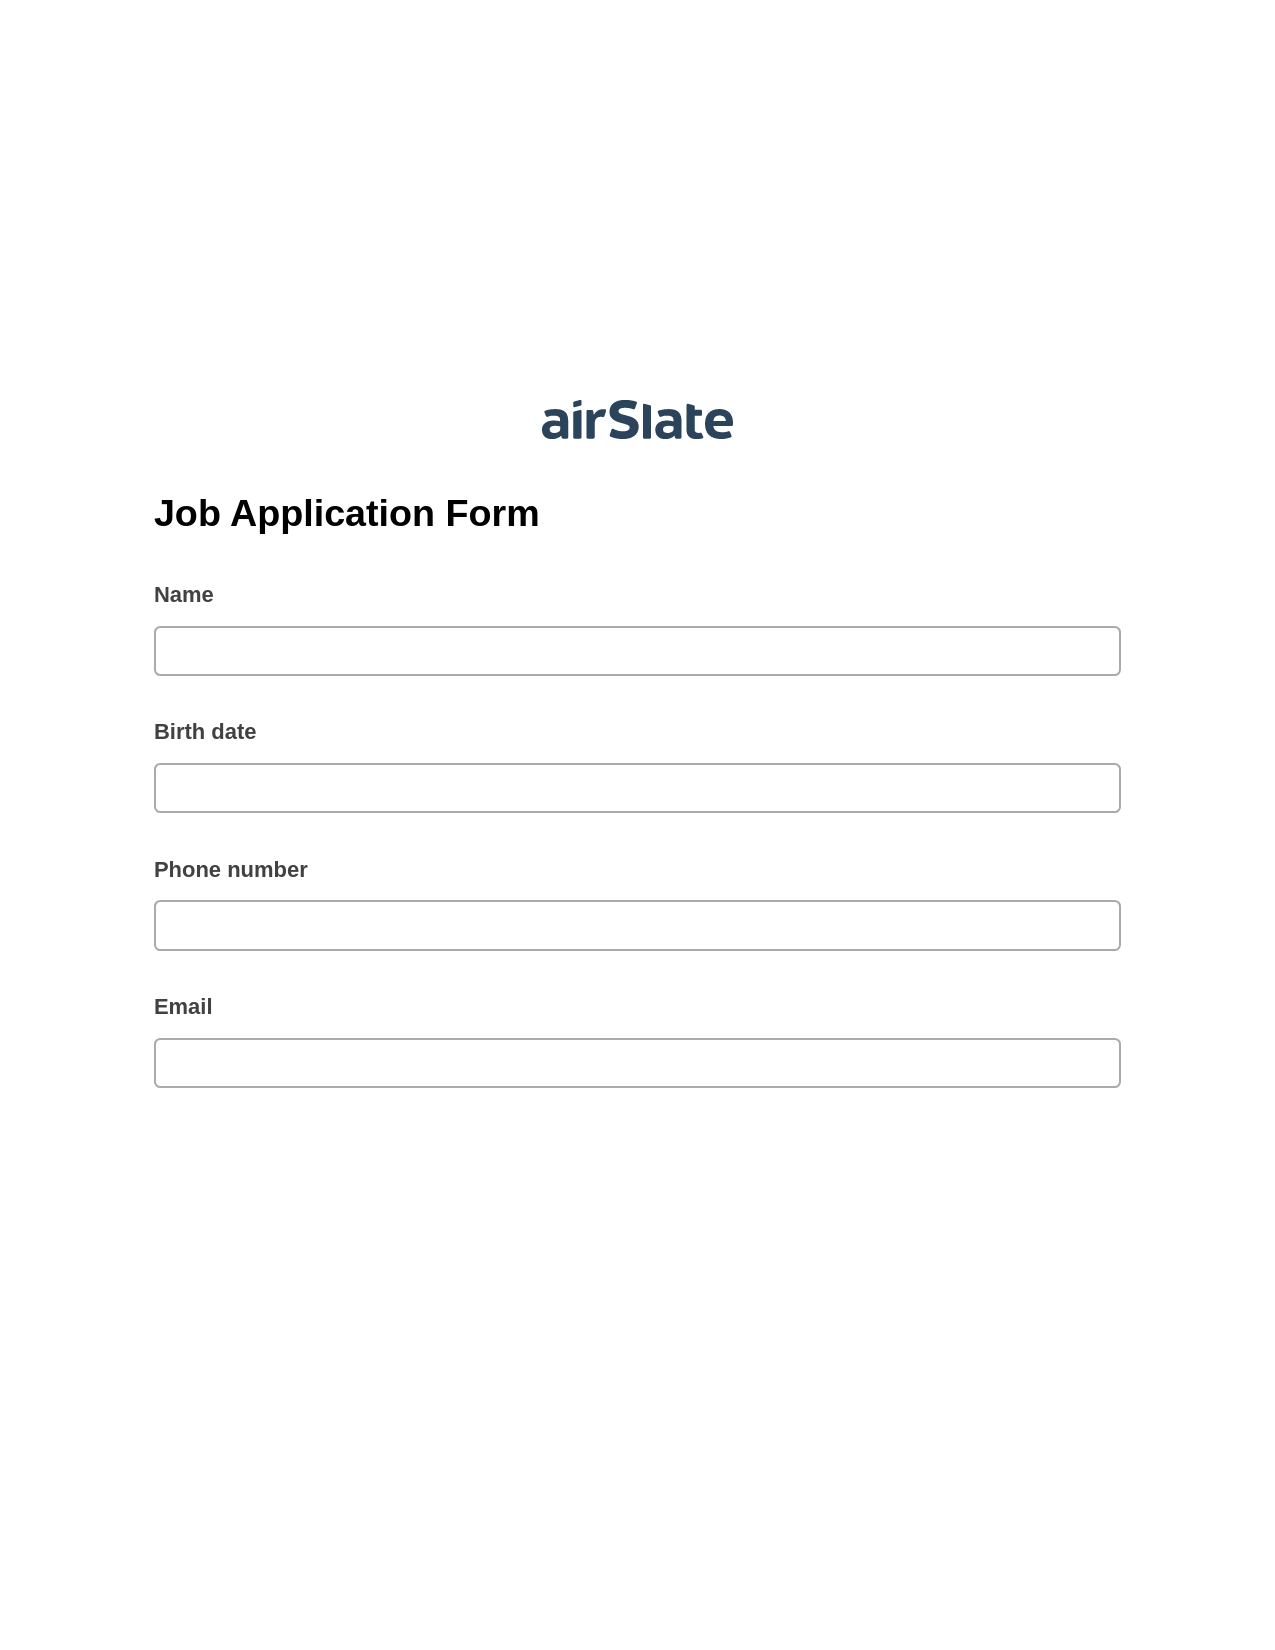 Multirole Job Application Form Pre-fill Slate from MS Dynamics 365 Records Bot, Lock the slate bot, Box Bot